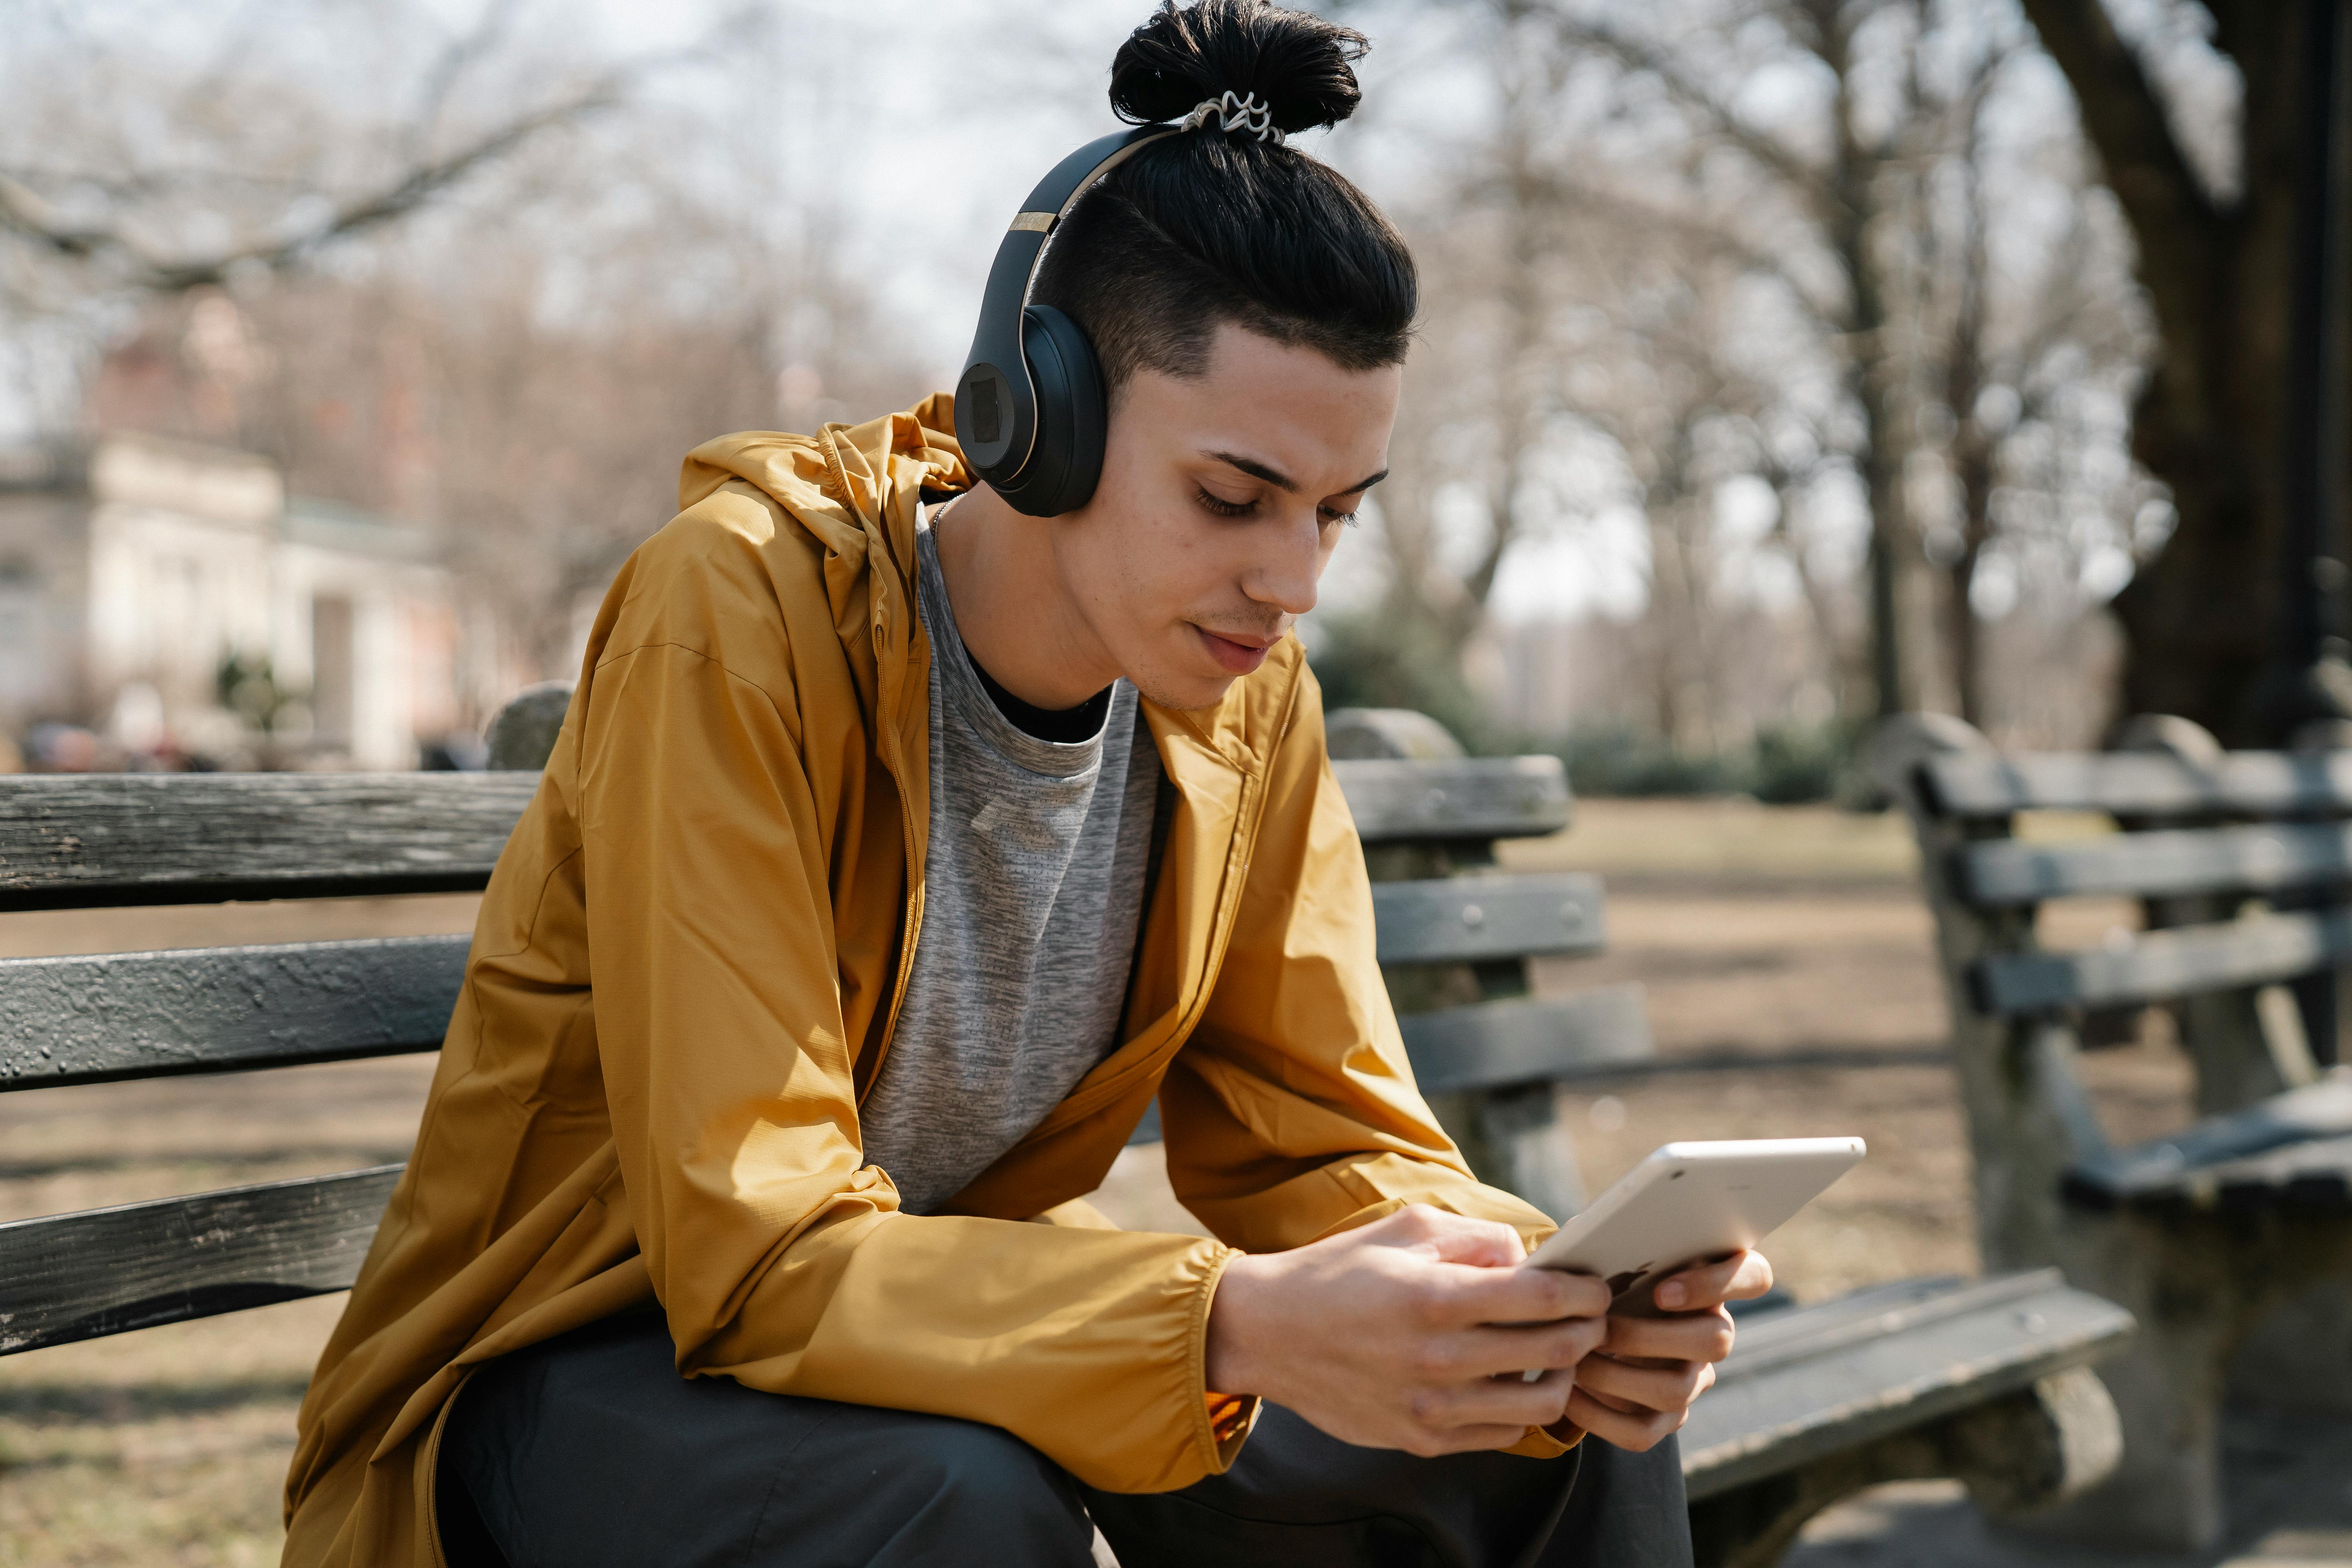 Young ethnic woman in TWS earphones using smartphone on bench in